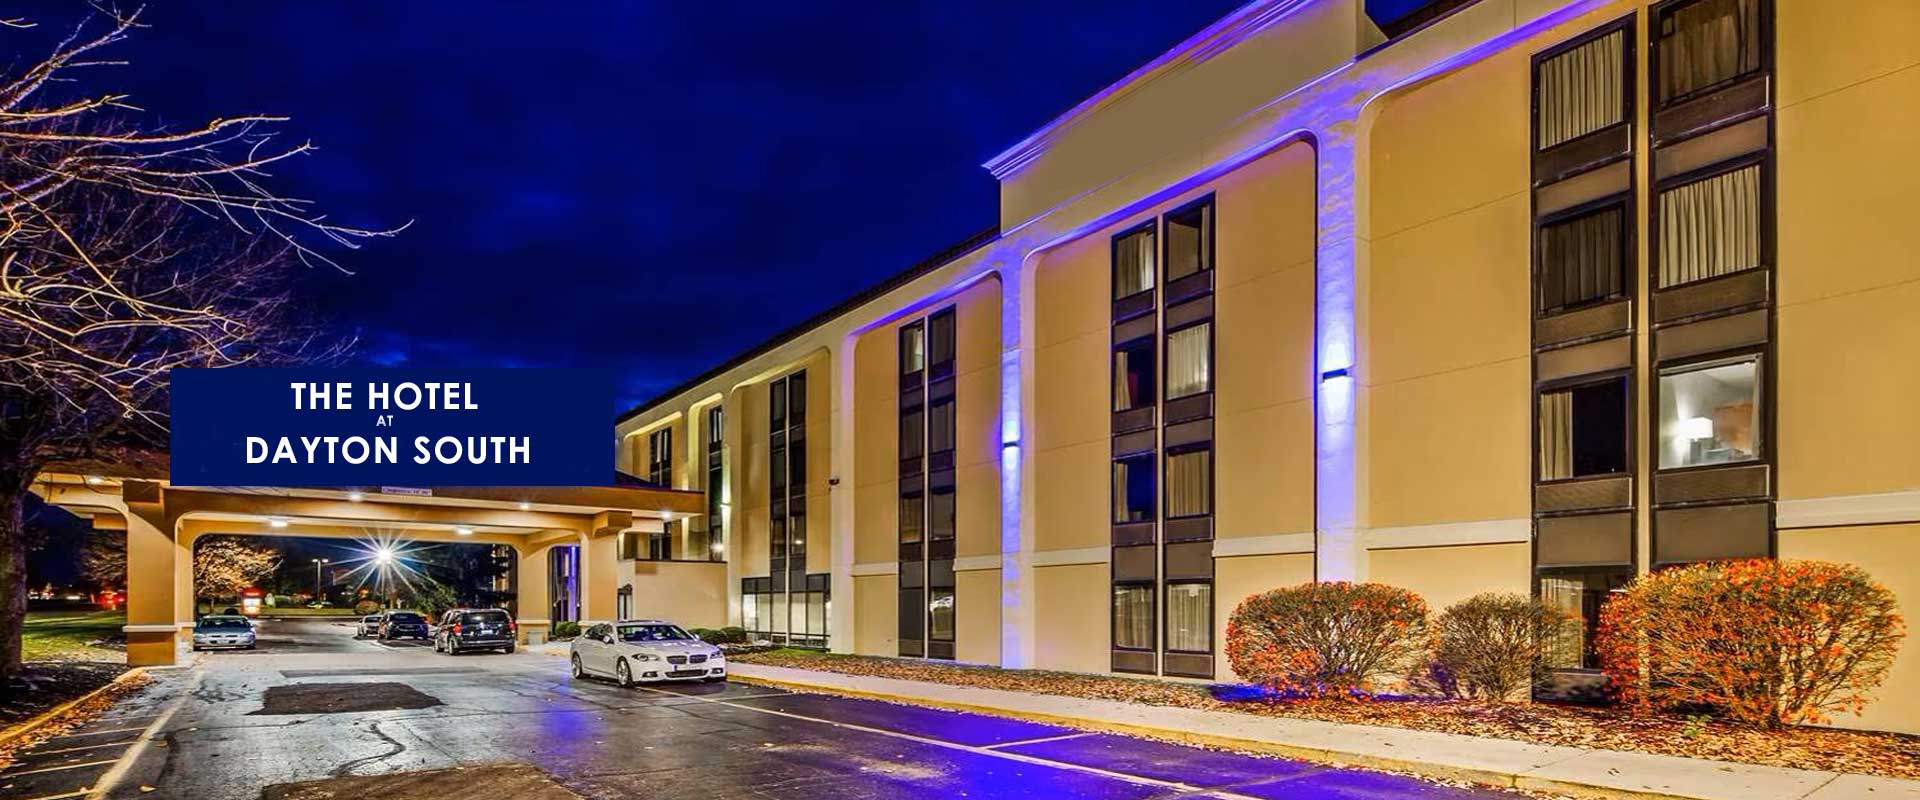 The Hotel at Dayton South | Dayton Budget Affordable Lodging